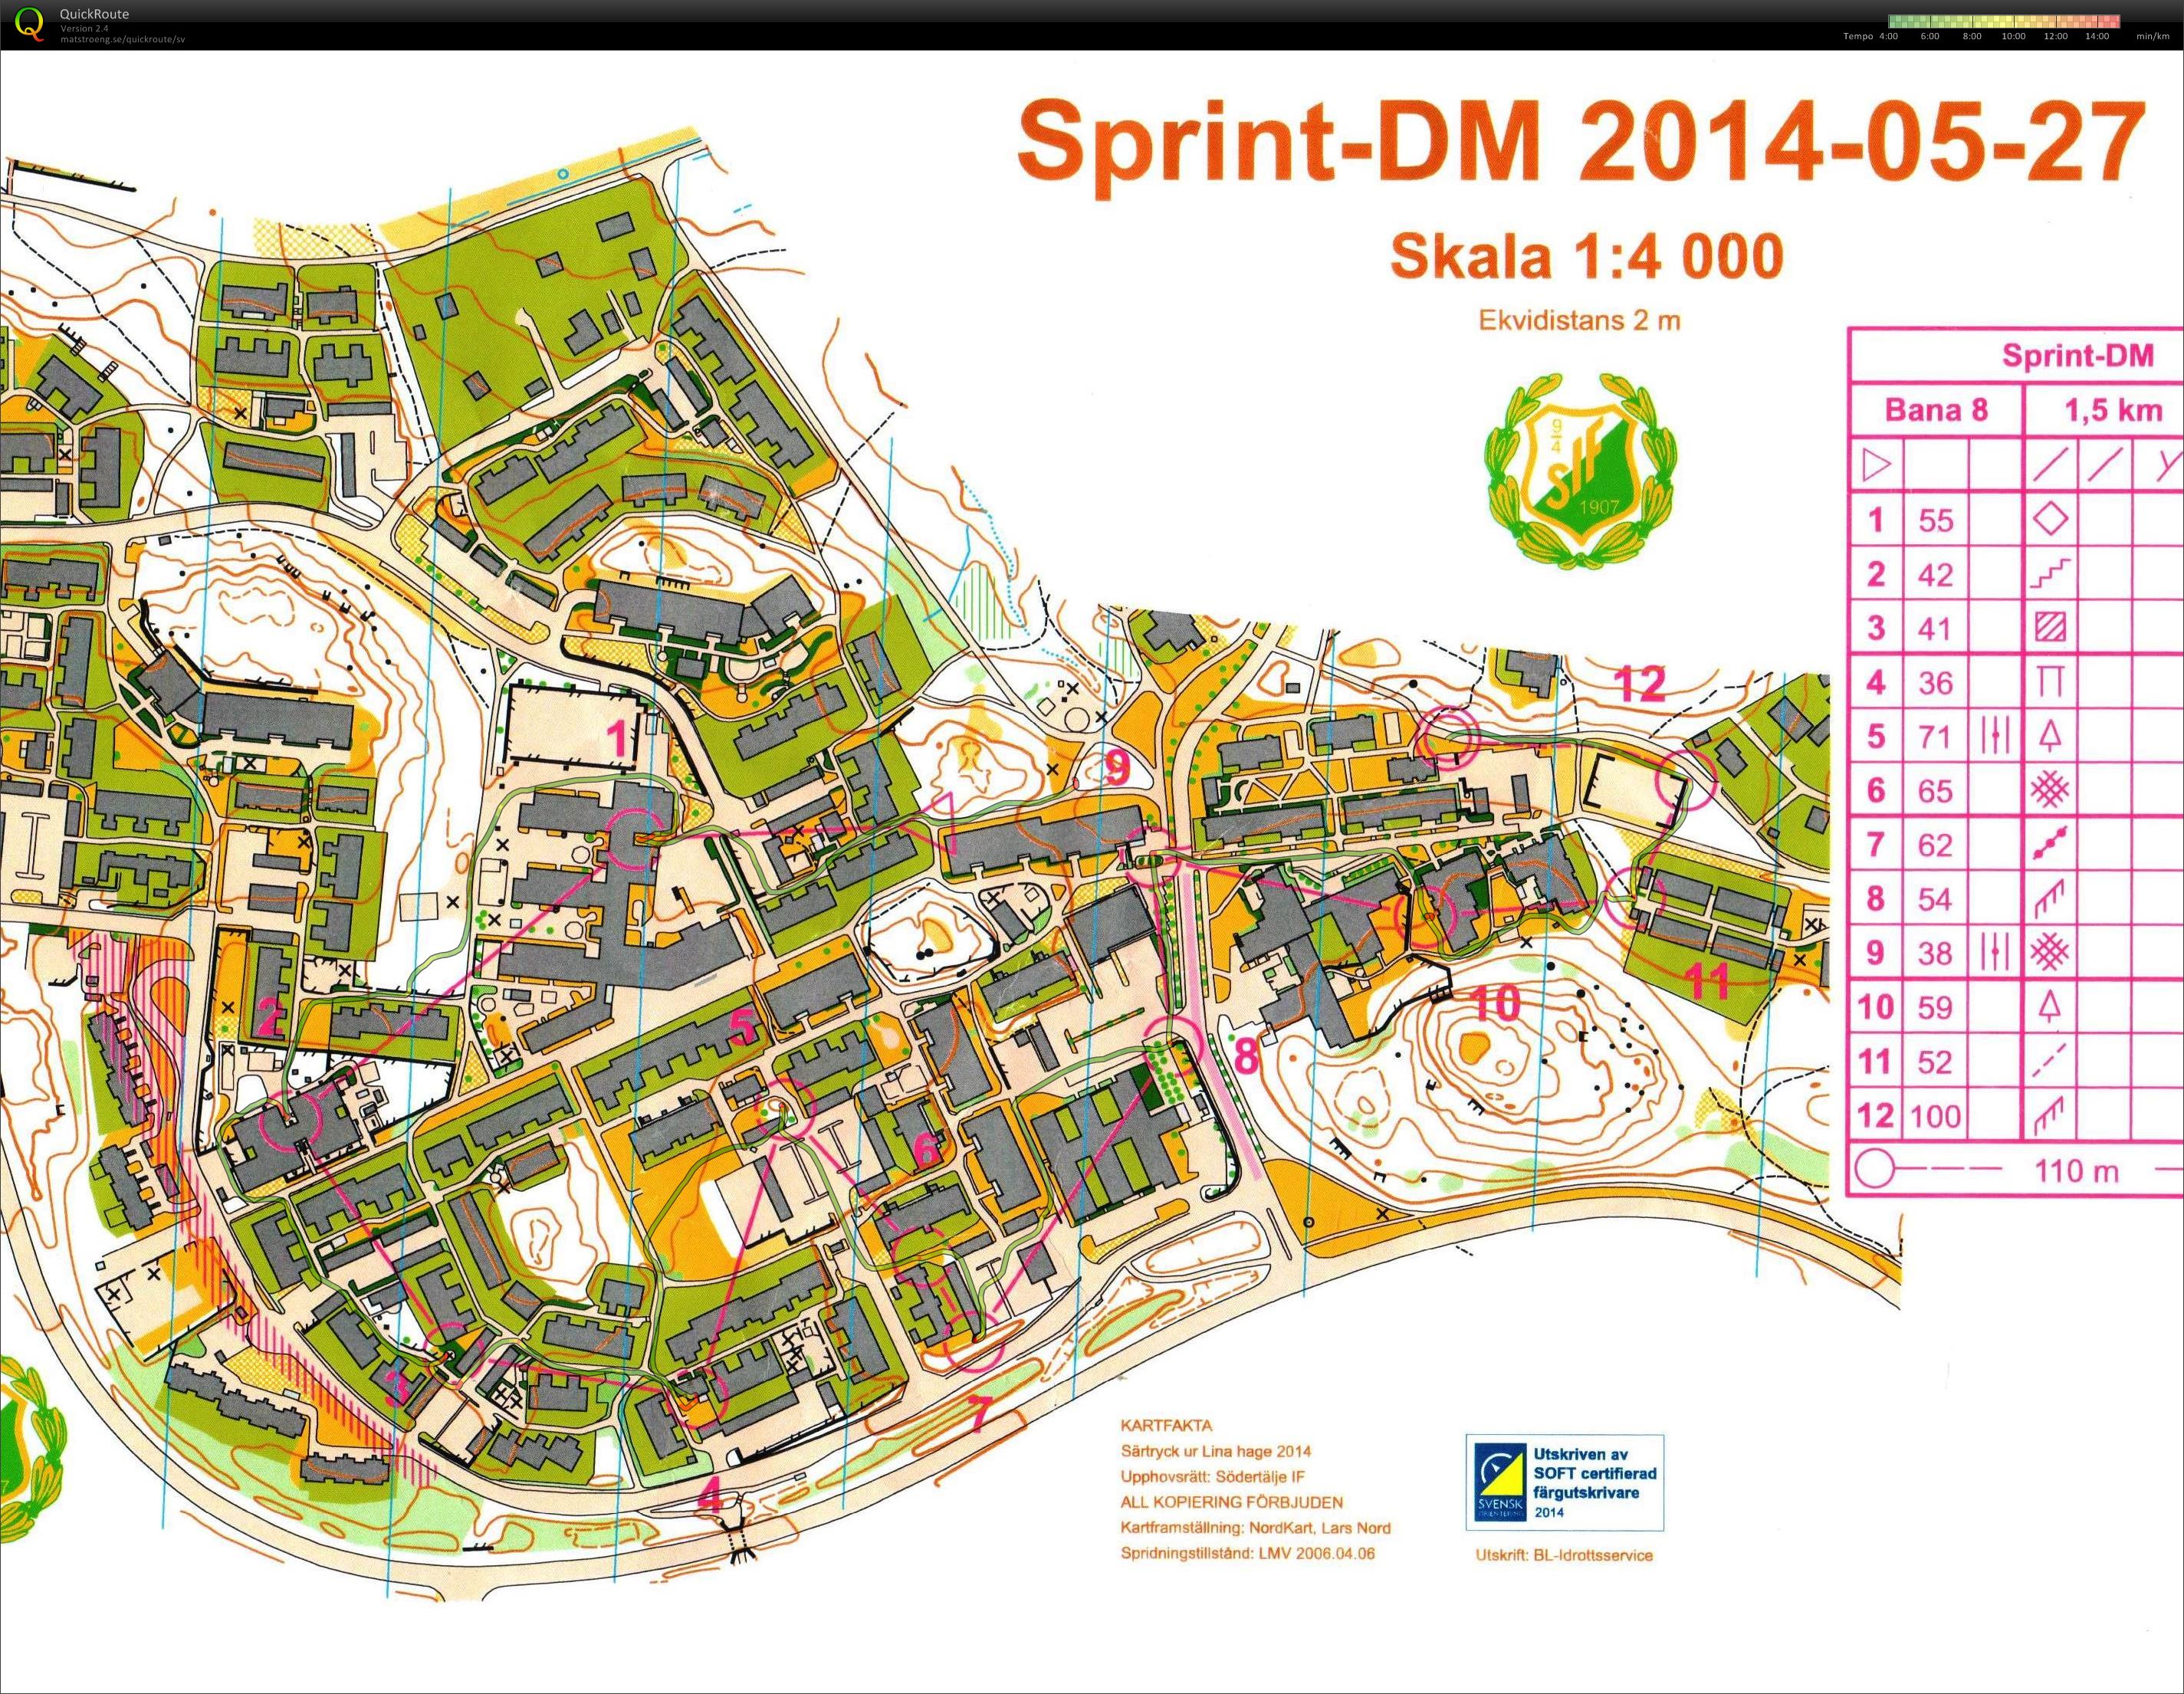 DM sprint Södermanland (27/05/2014)